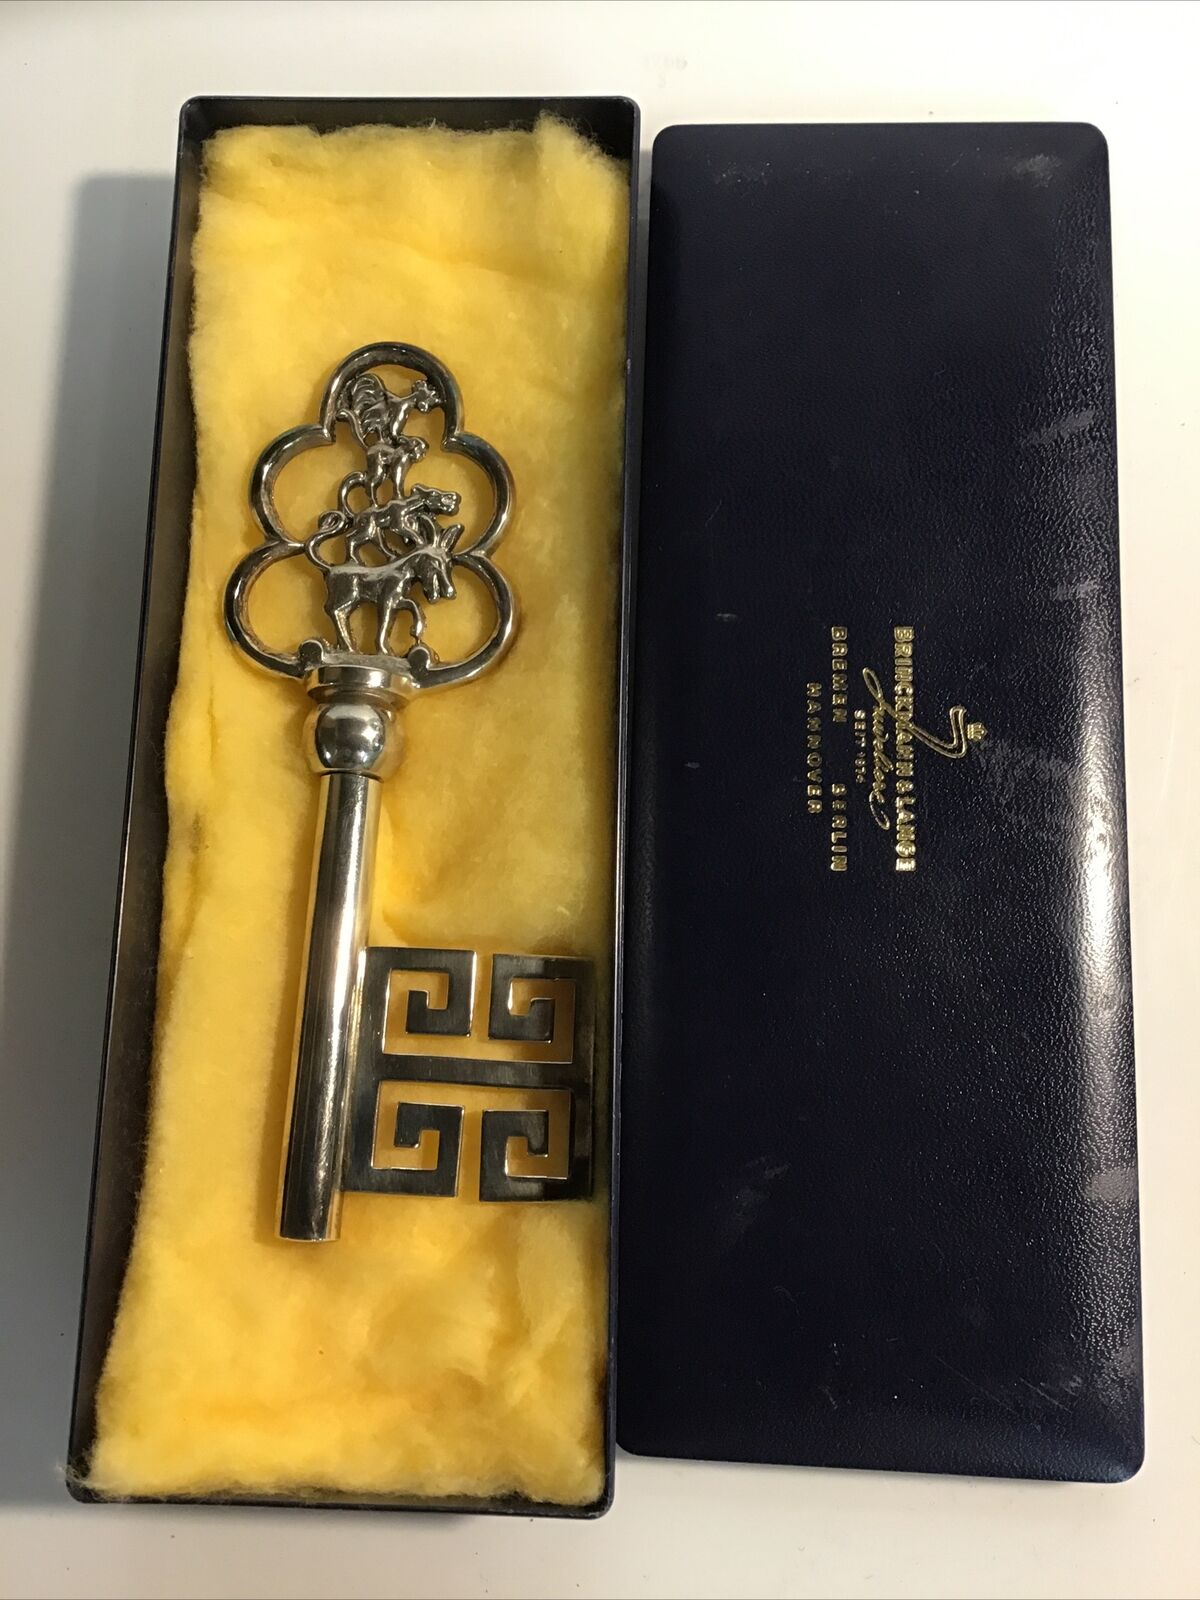 VINTAGE Brinckmann & Lange Jewelers Large 1960’s Era Key Corkscrew Mint In Box